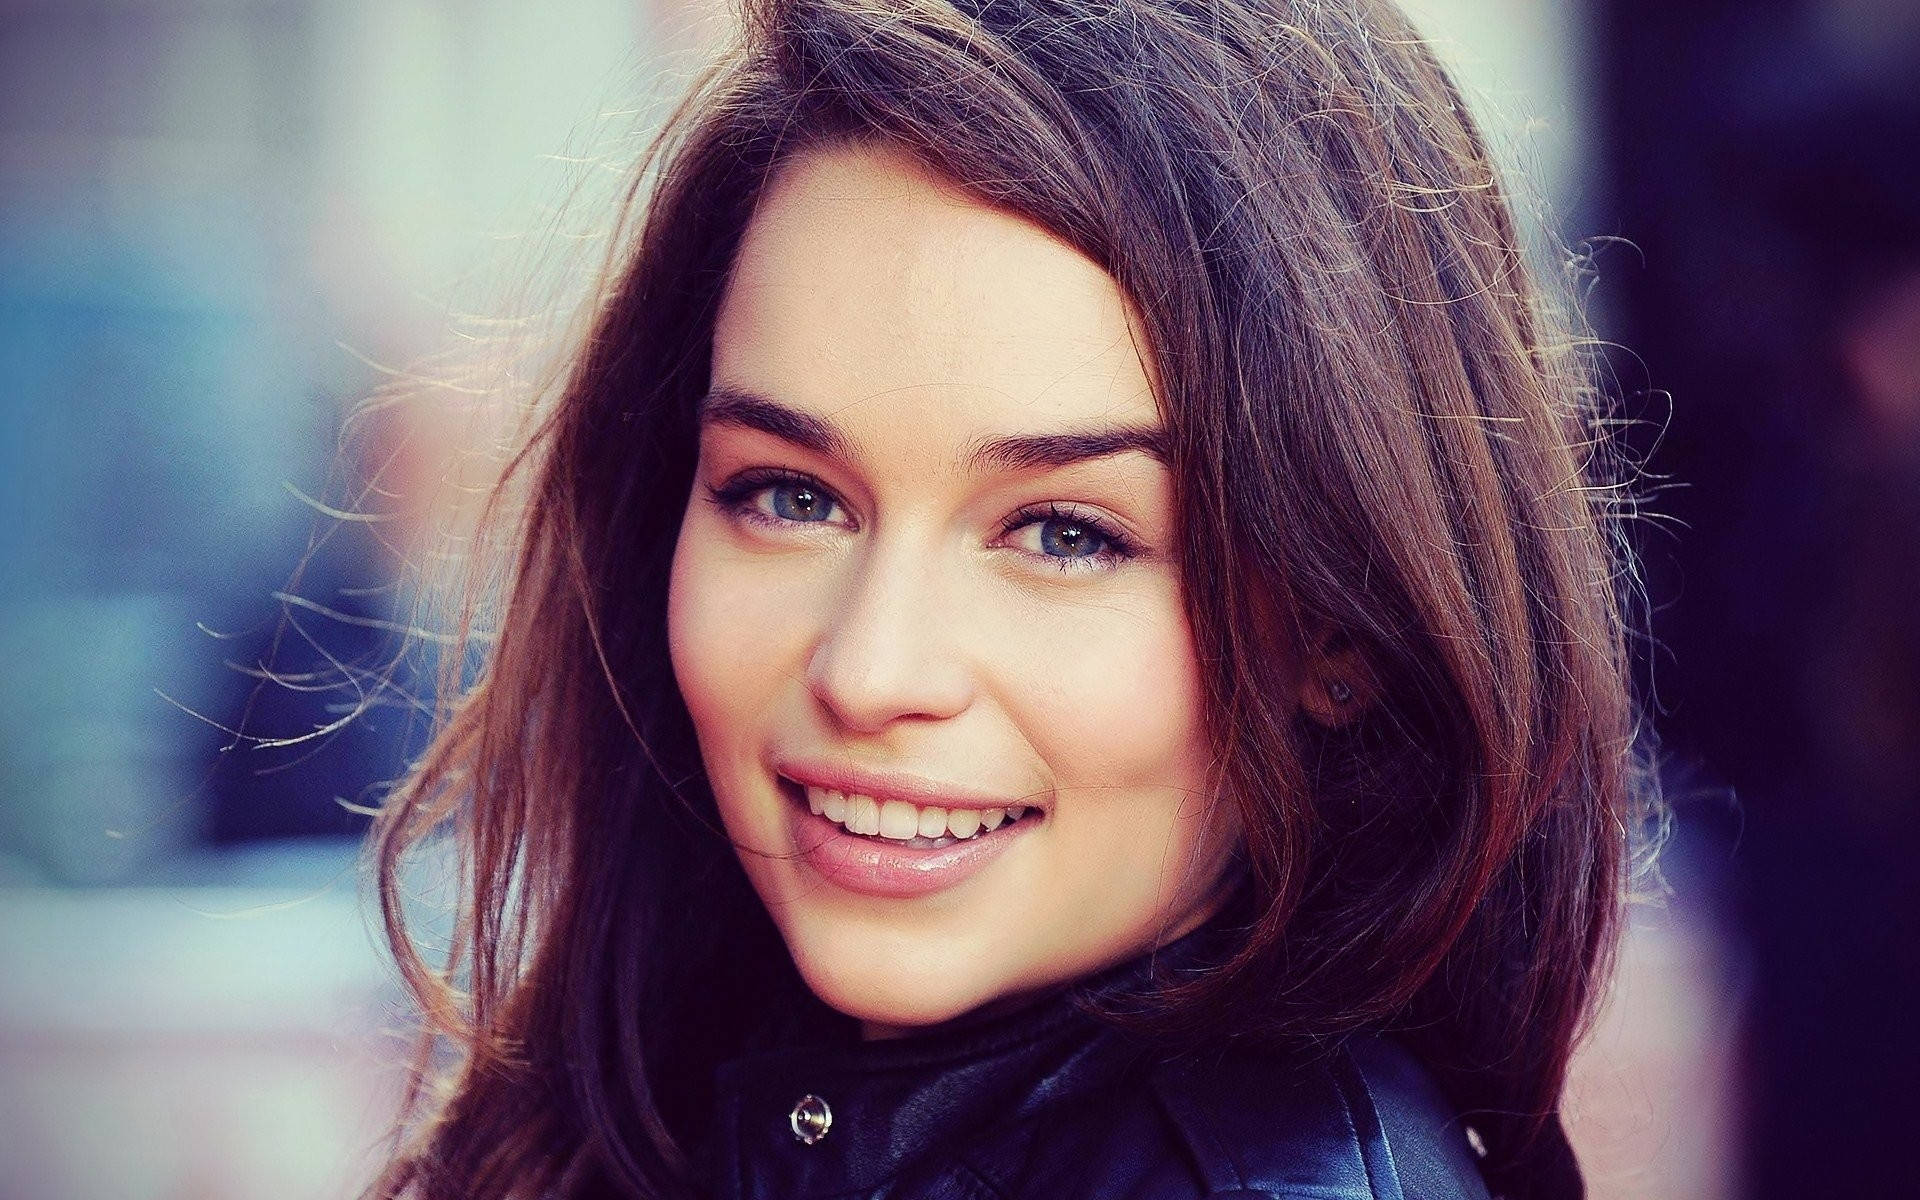 Young Actress Emilia Clarke Background